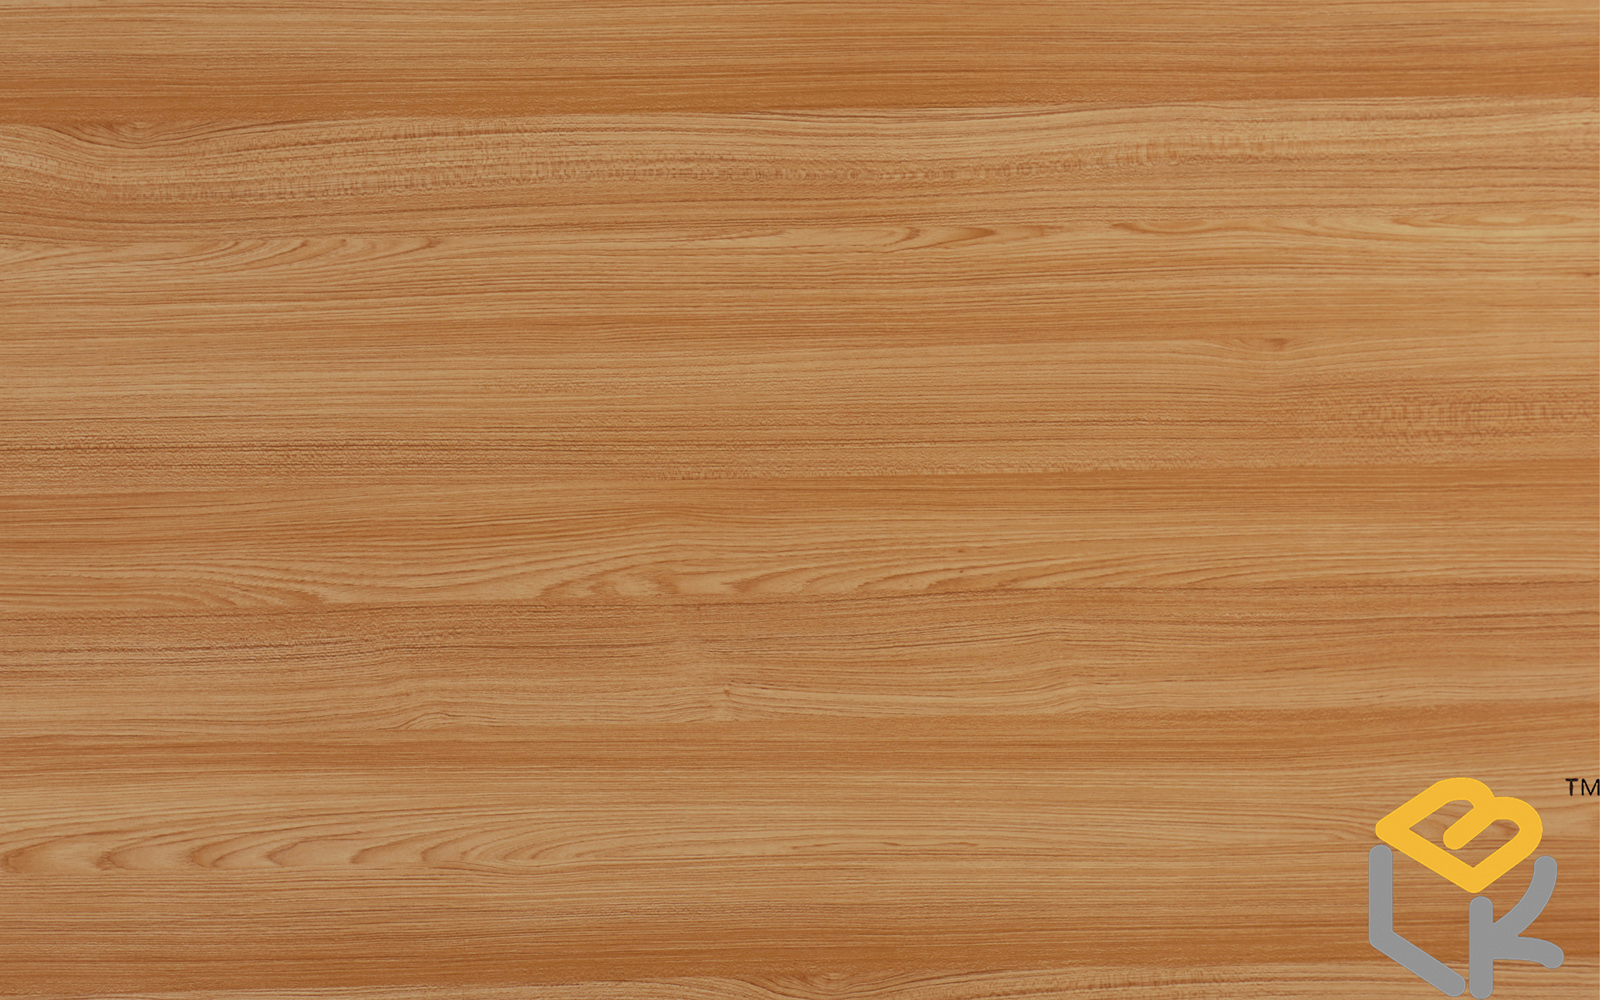 Woodgrain melamine faced plywood from China